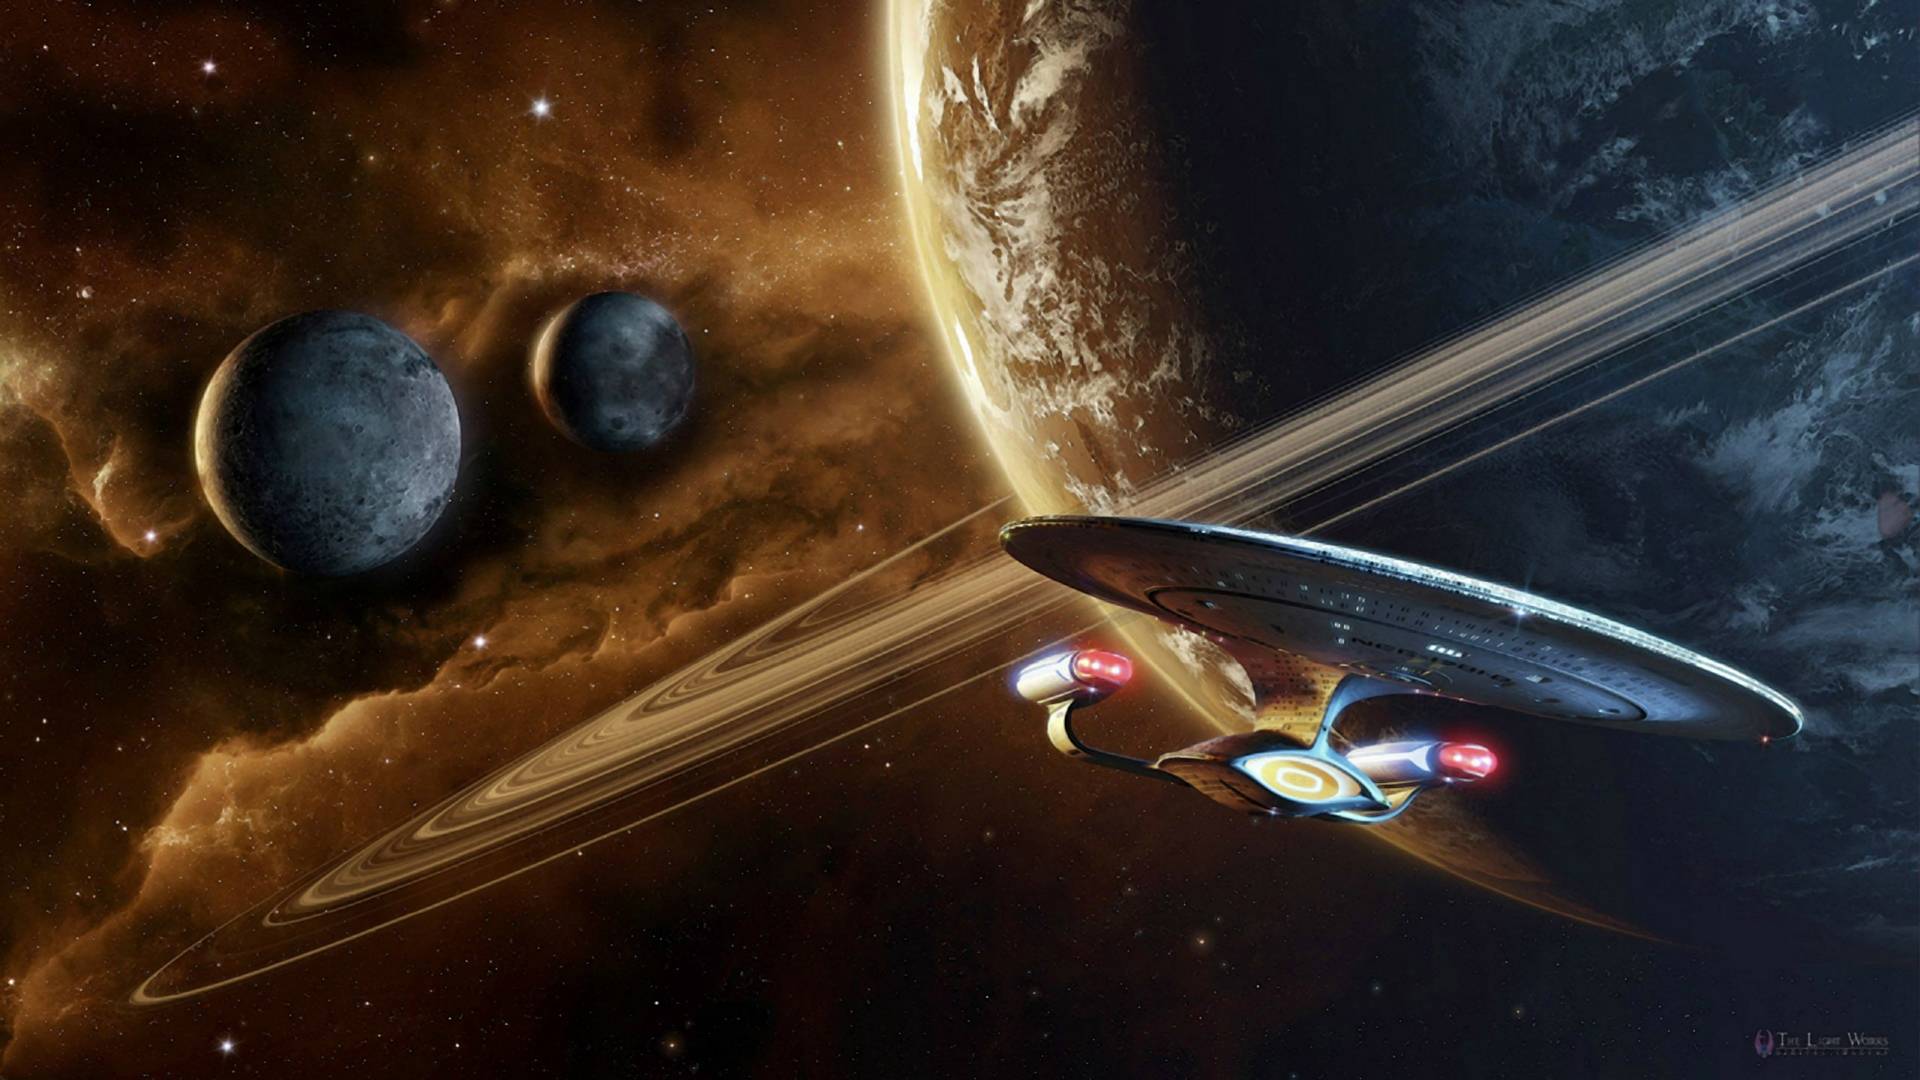 enterprise (star trek), star trek: the next generation, tv show, planet, space, spaceship, star trek